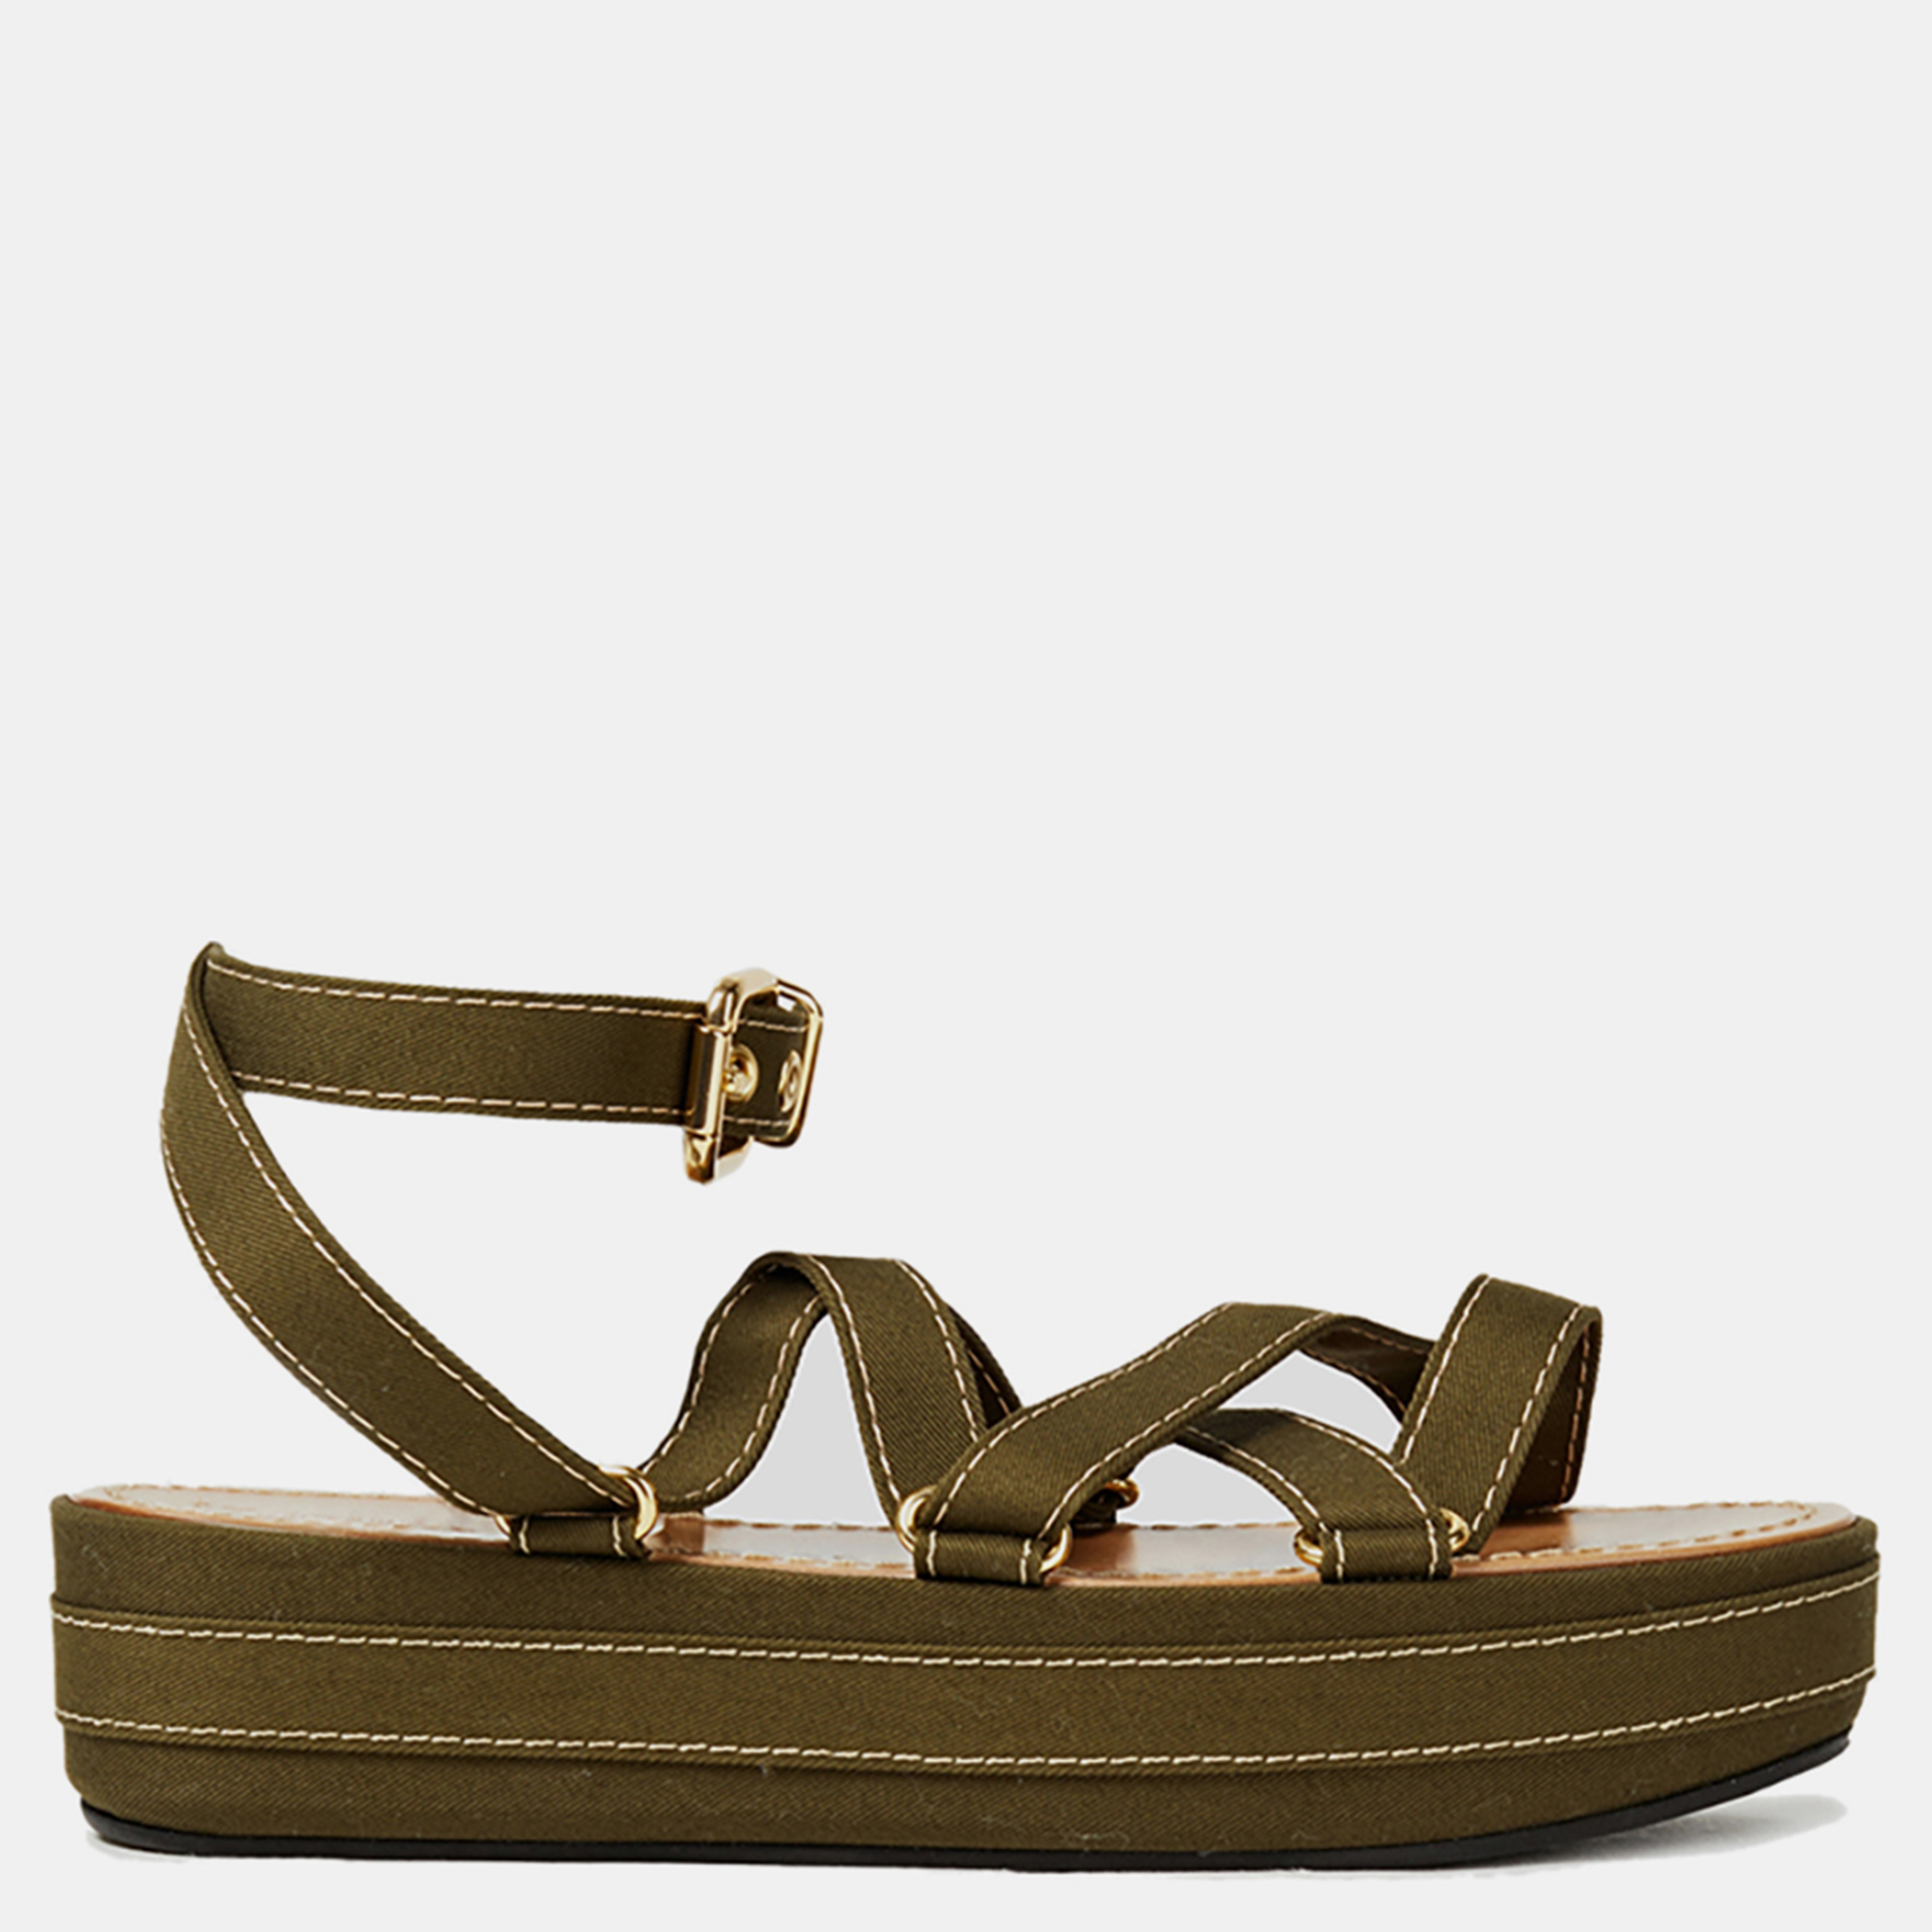 Marni green platform sandals size size 40